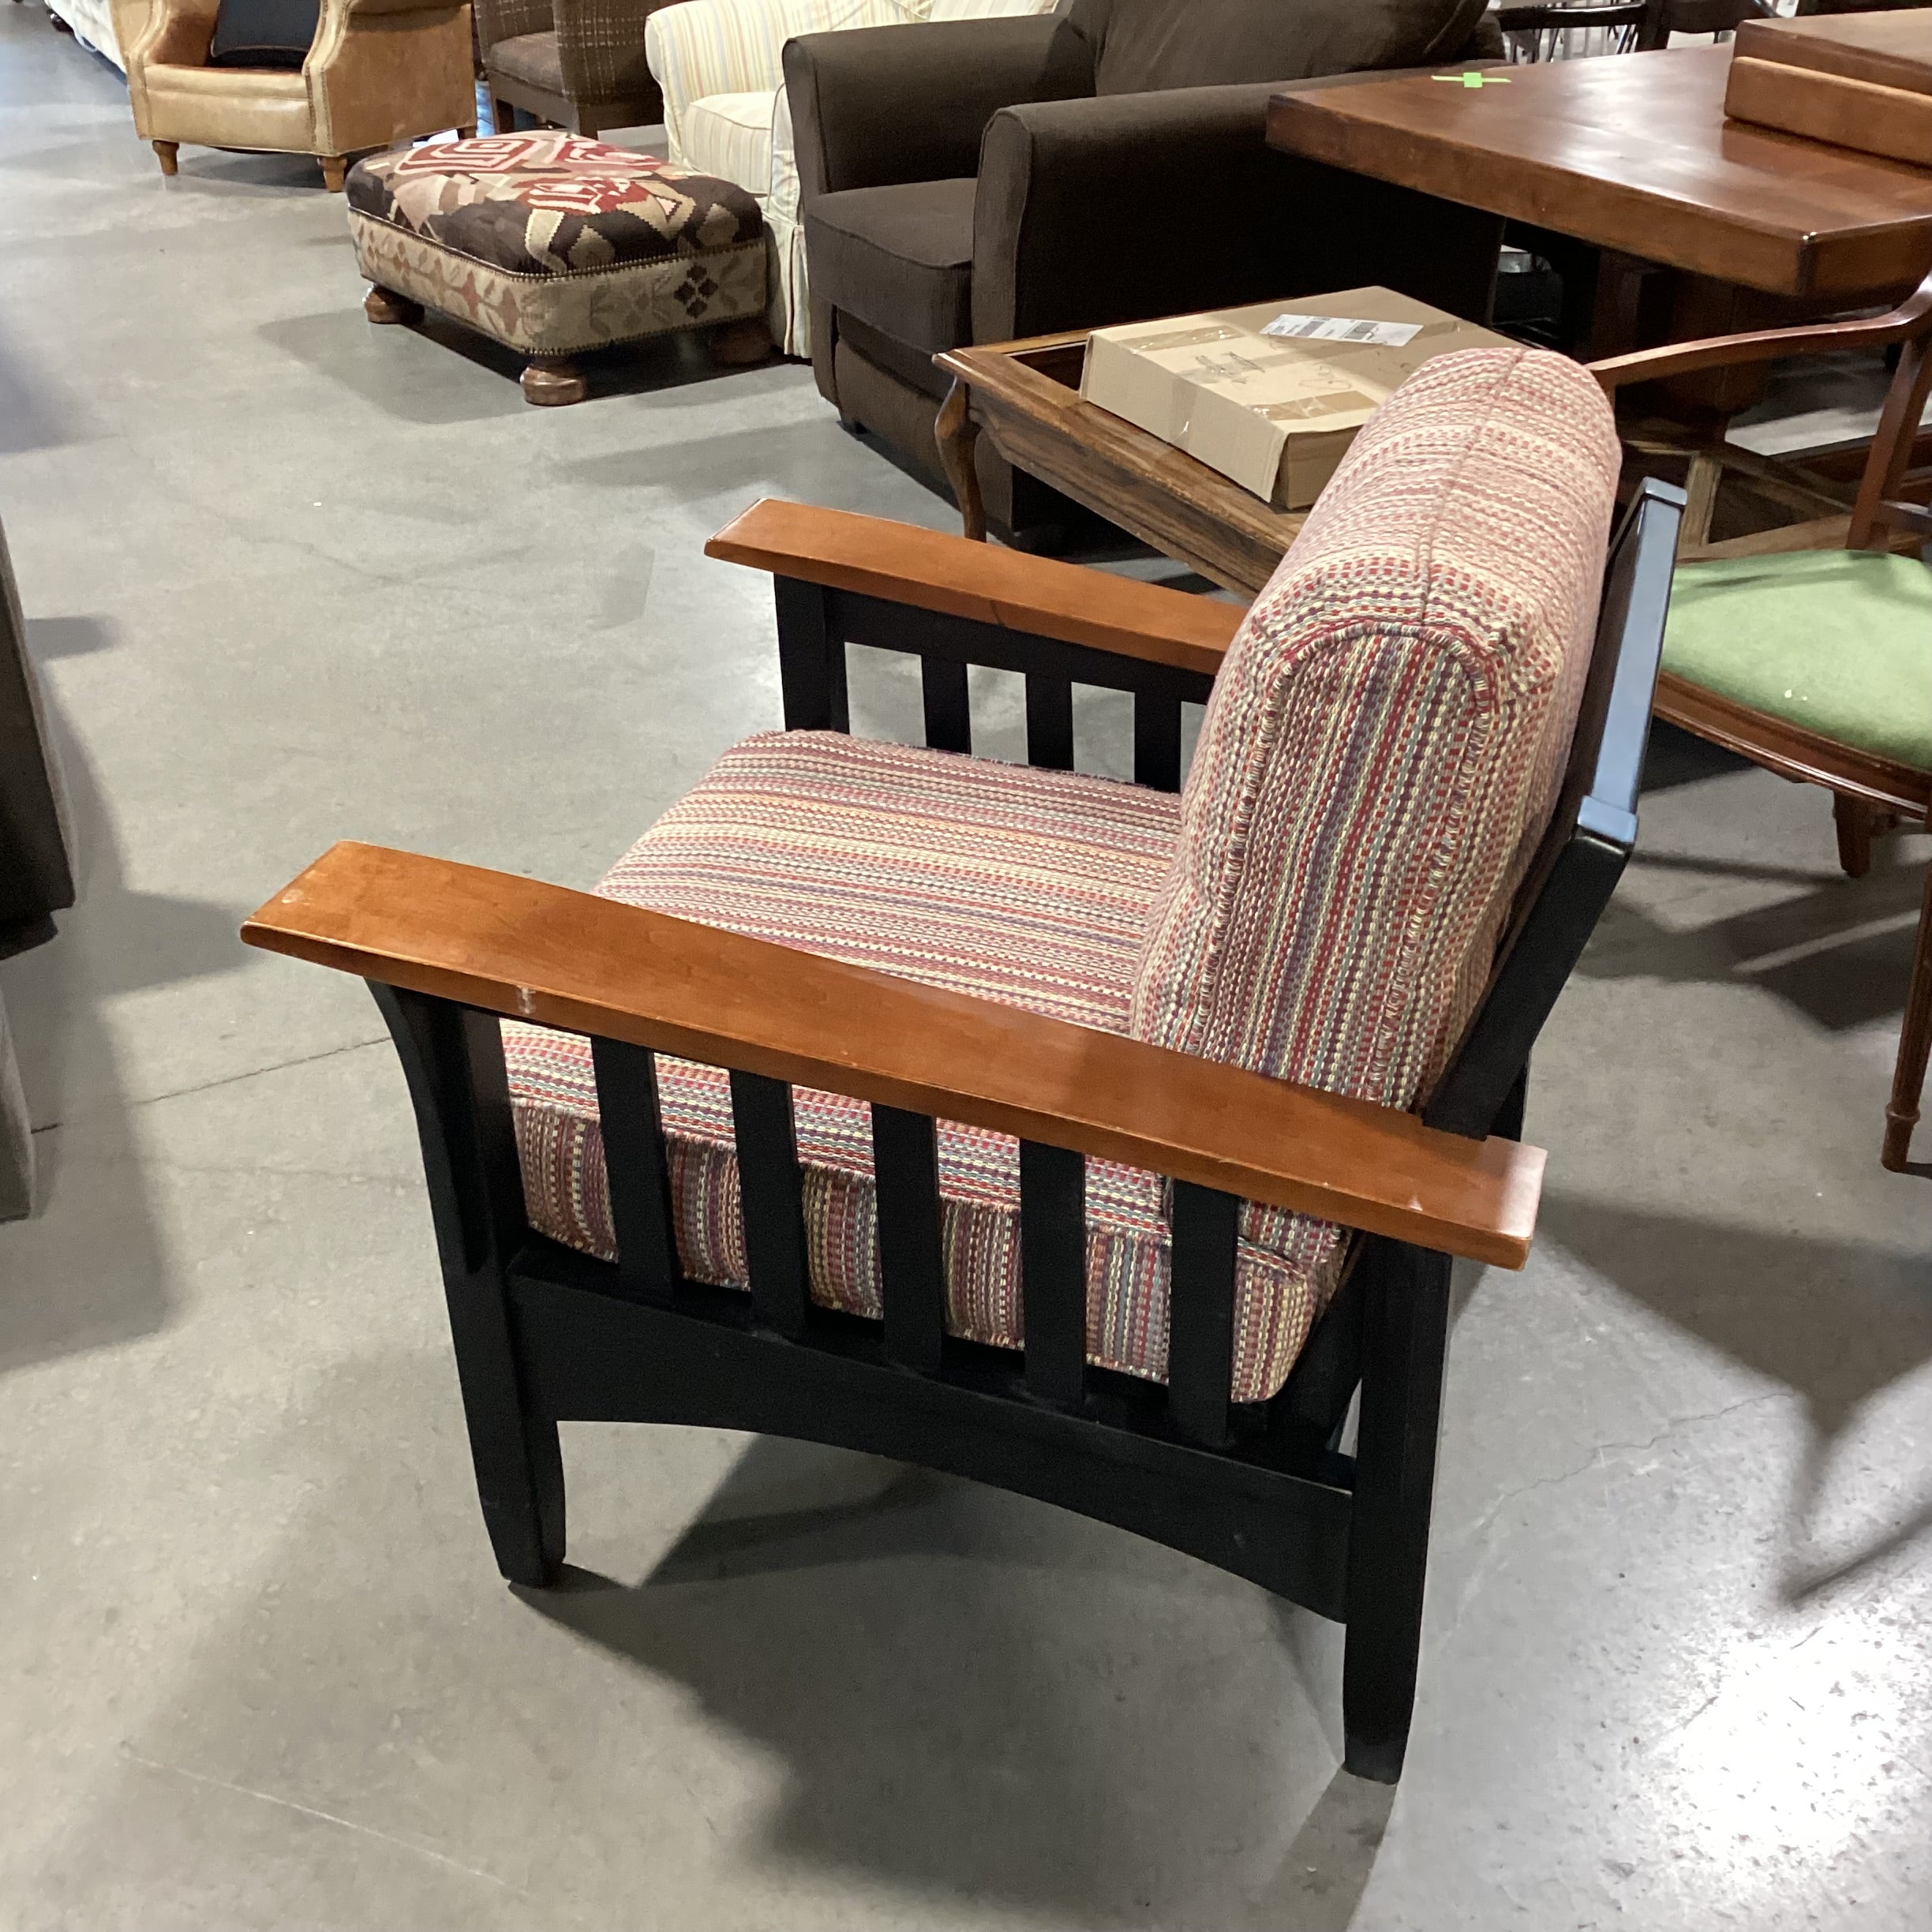 Ethan Allen Multi Woven & Wood Chair 35"x 33"x 29.5"